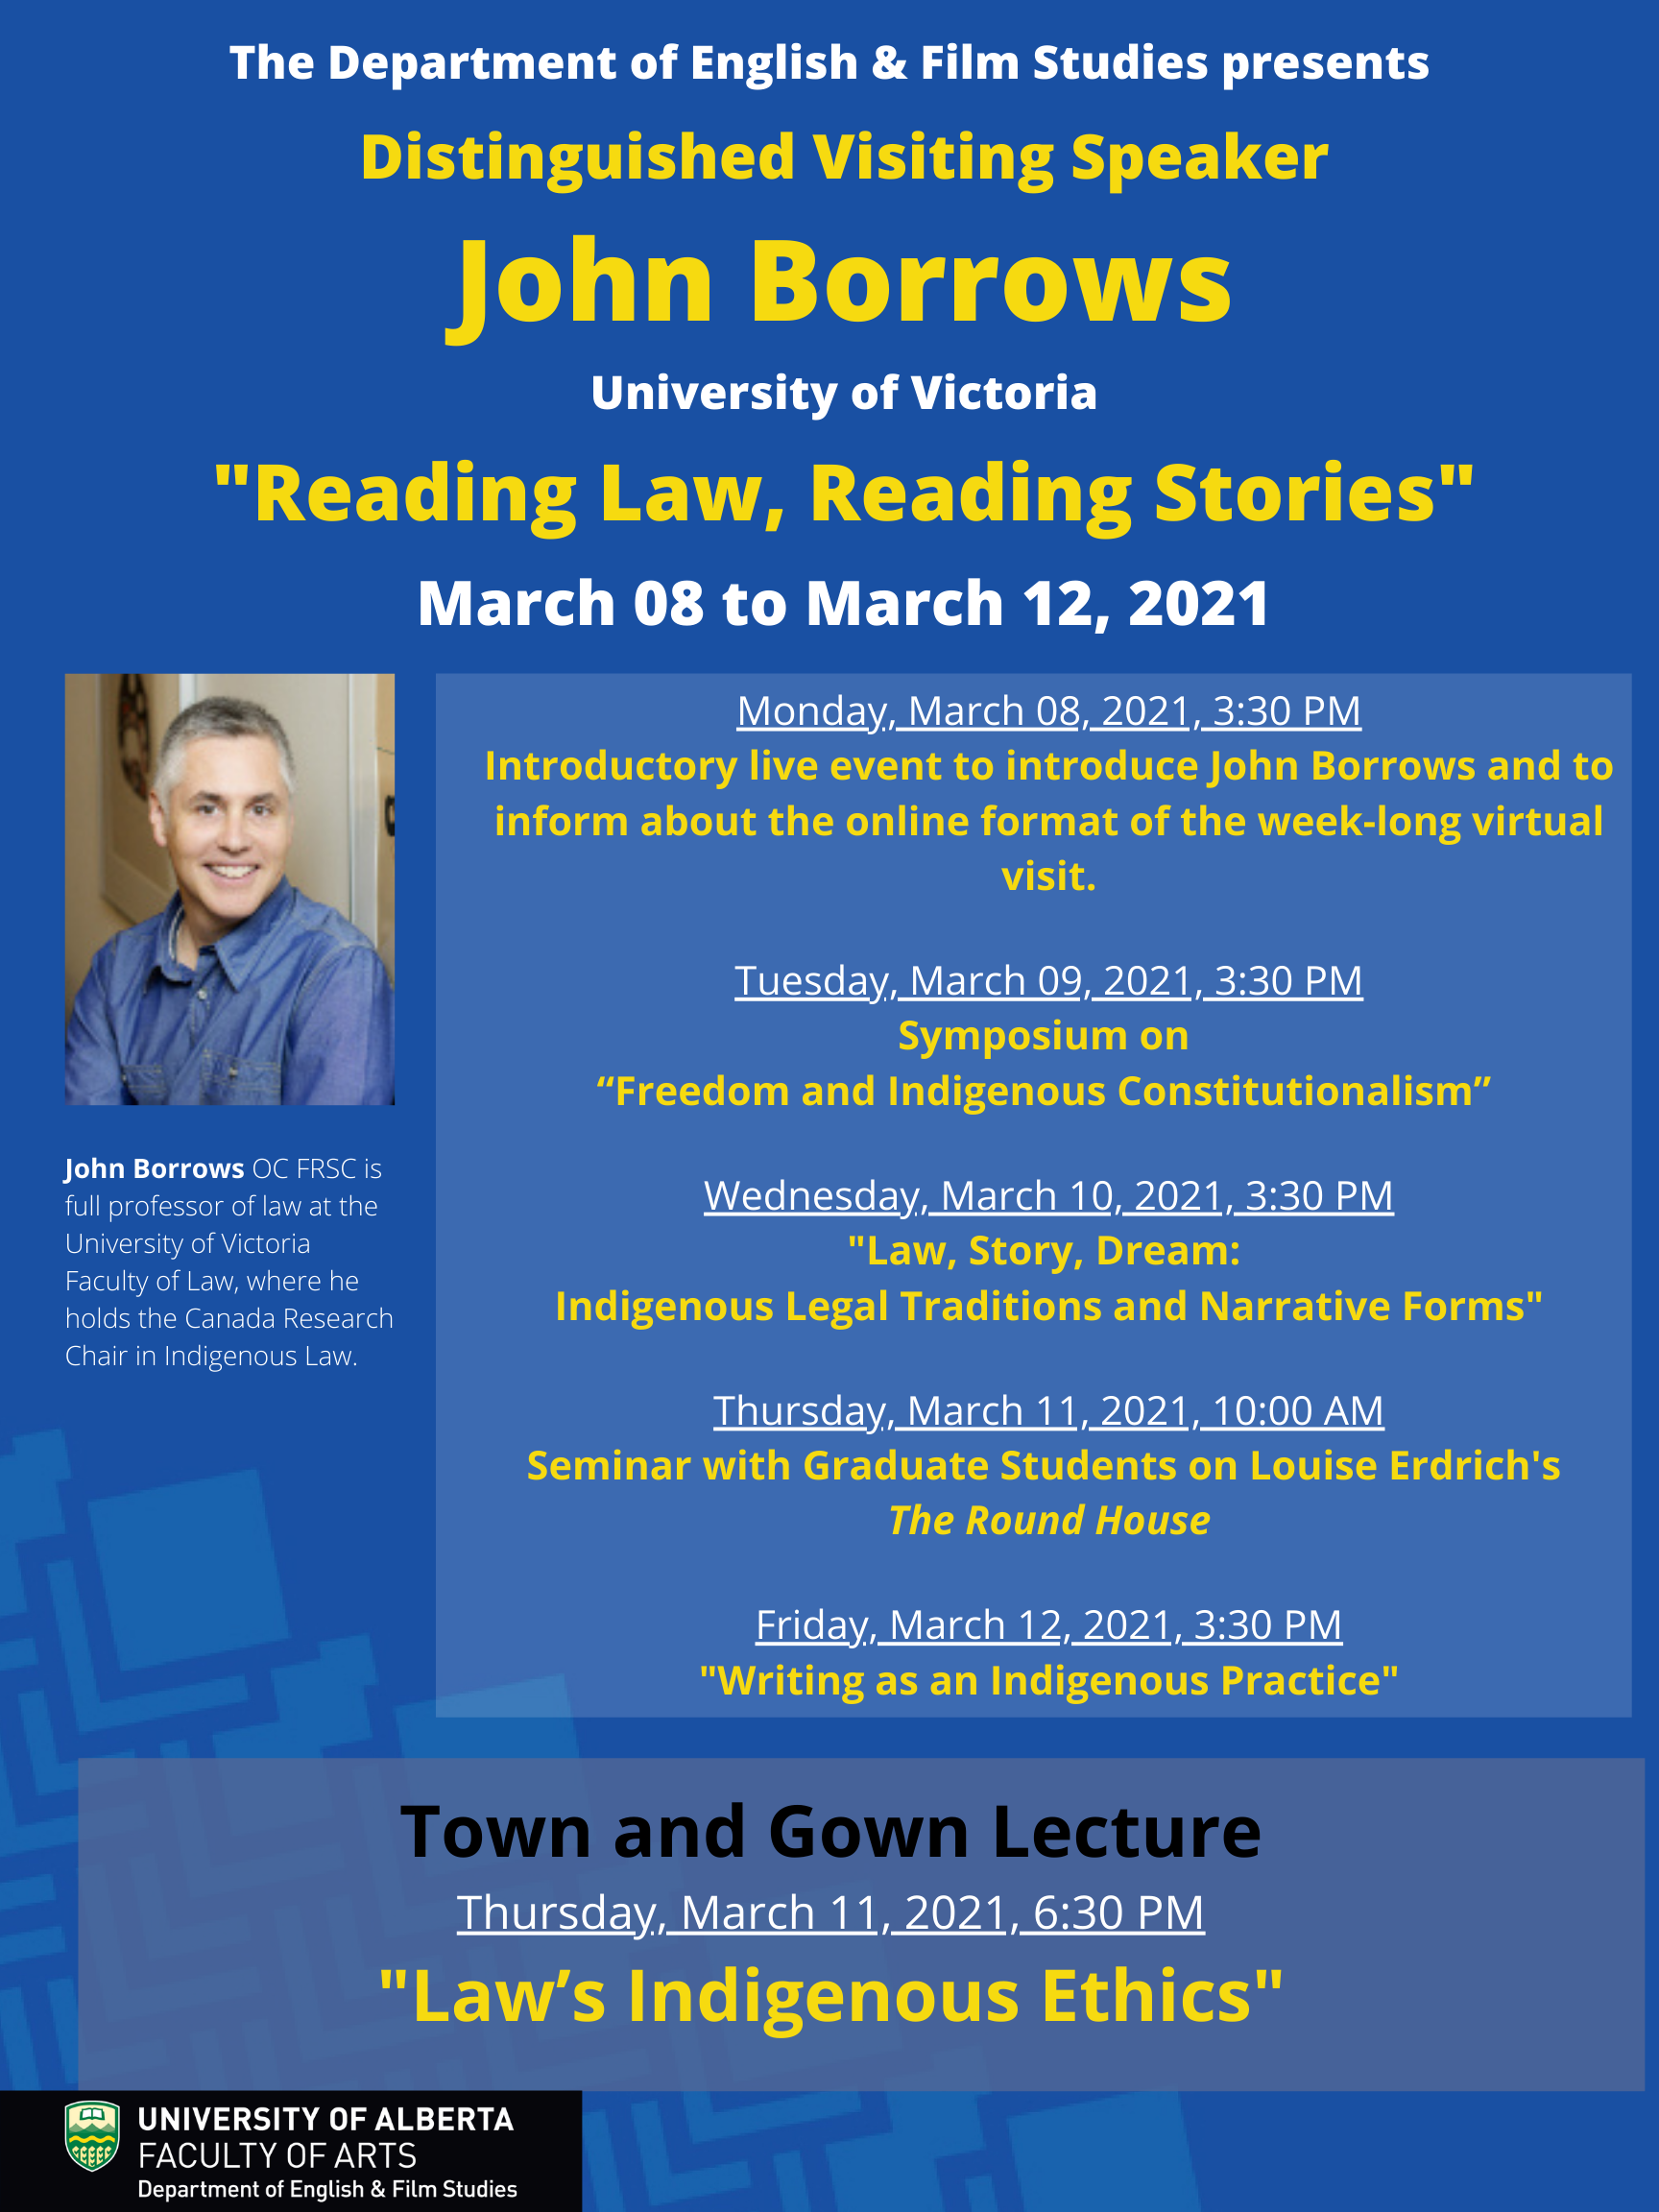 John Borrows poster of events